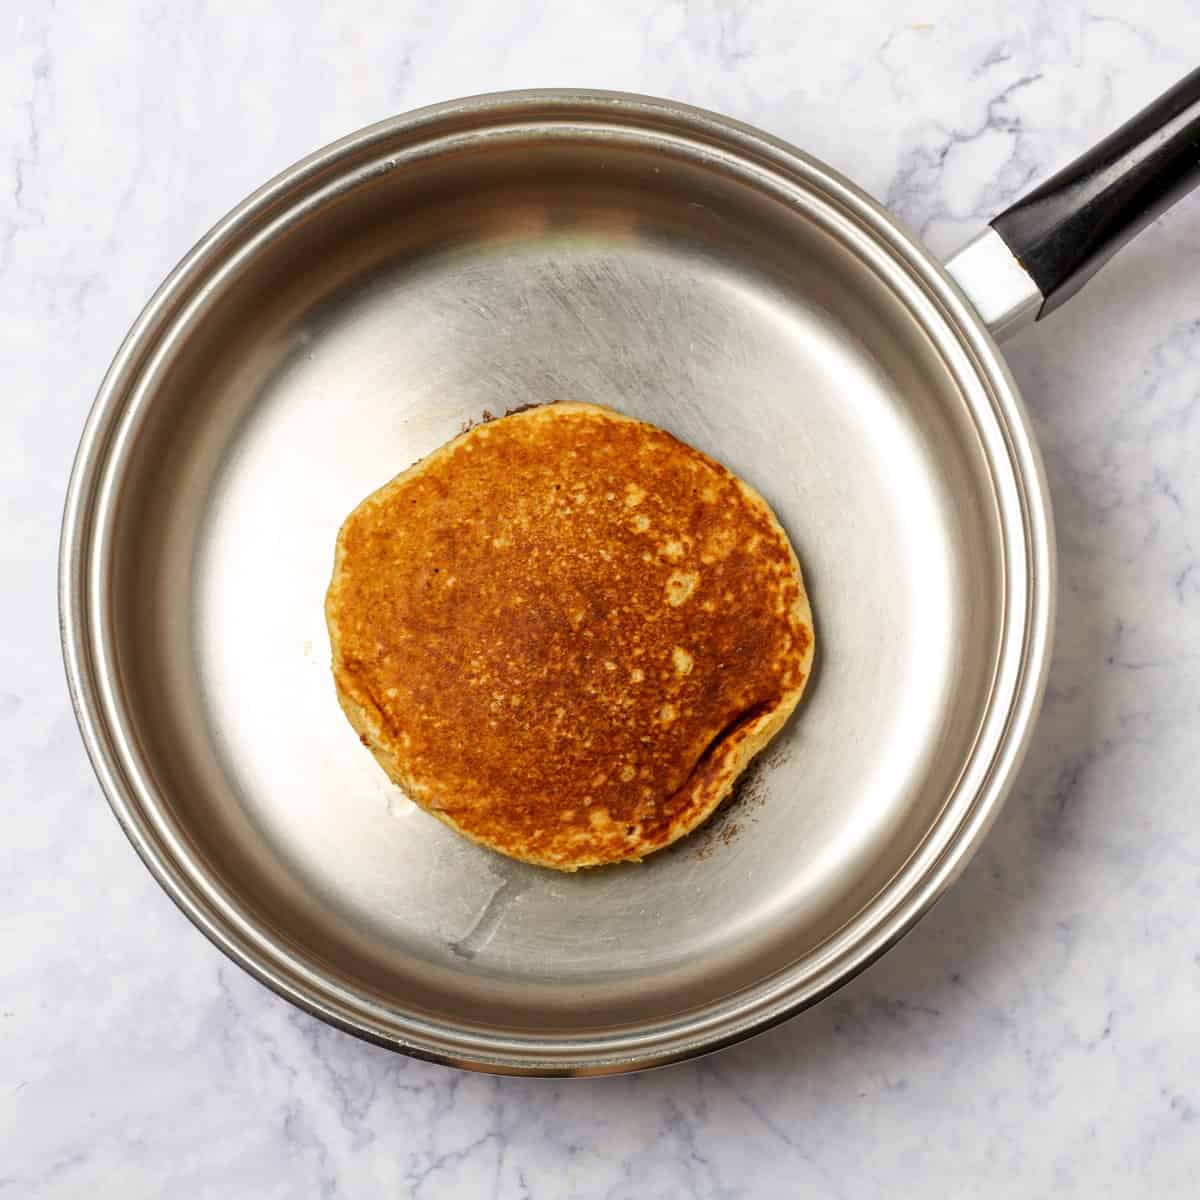 An apple pancake cooking in a hot pan.